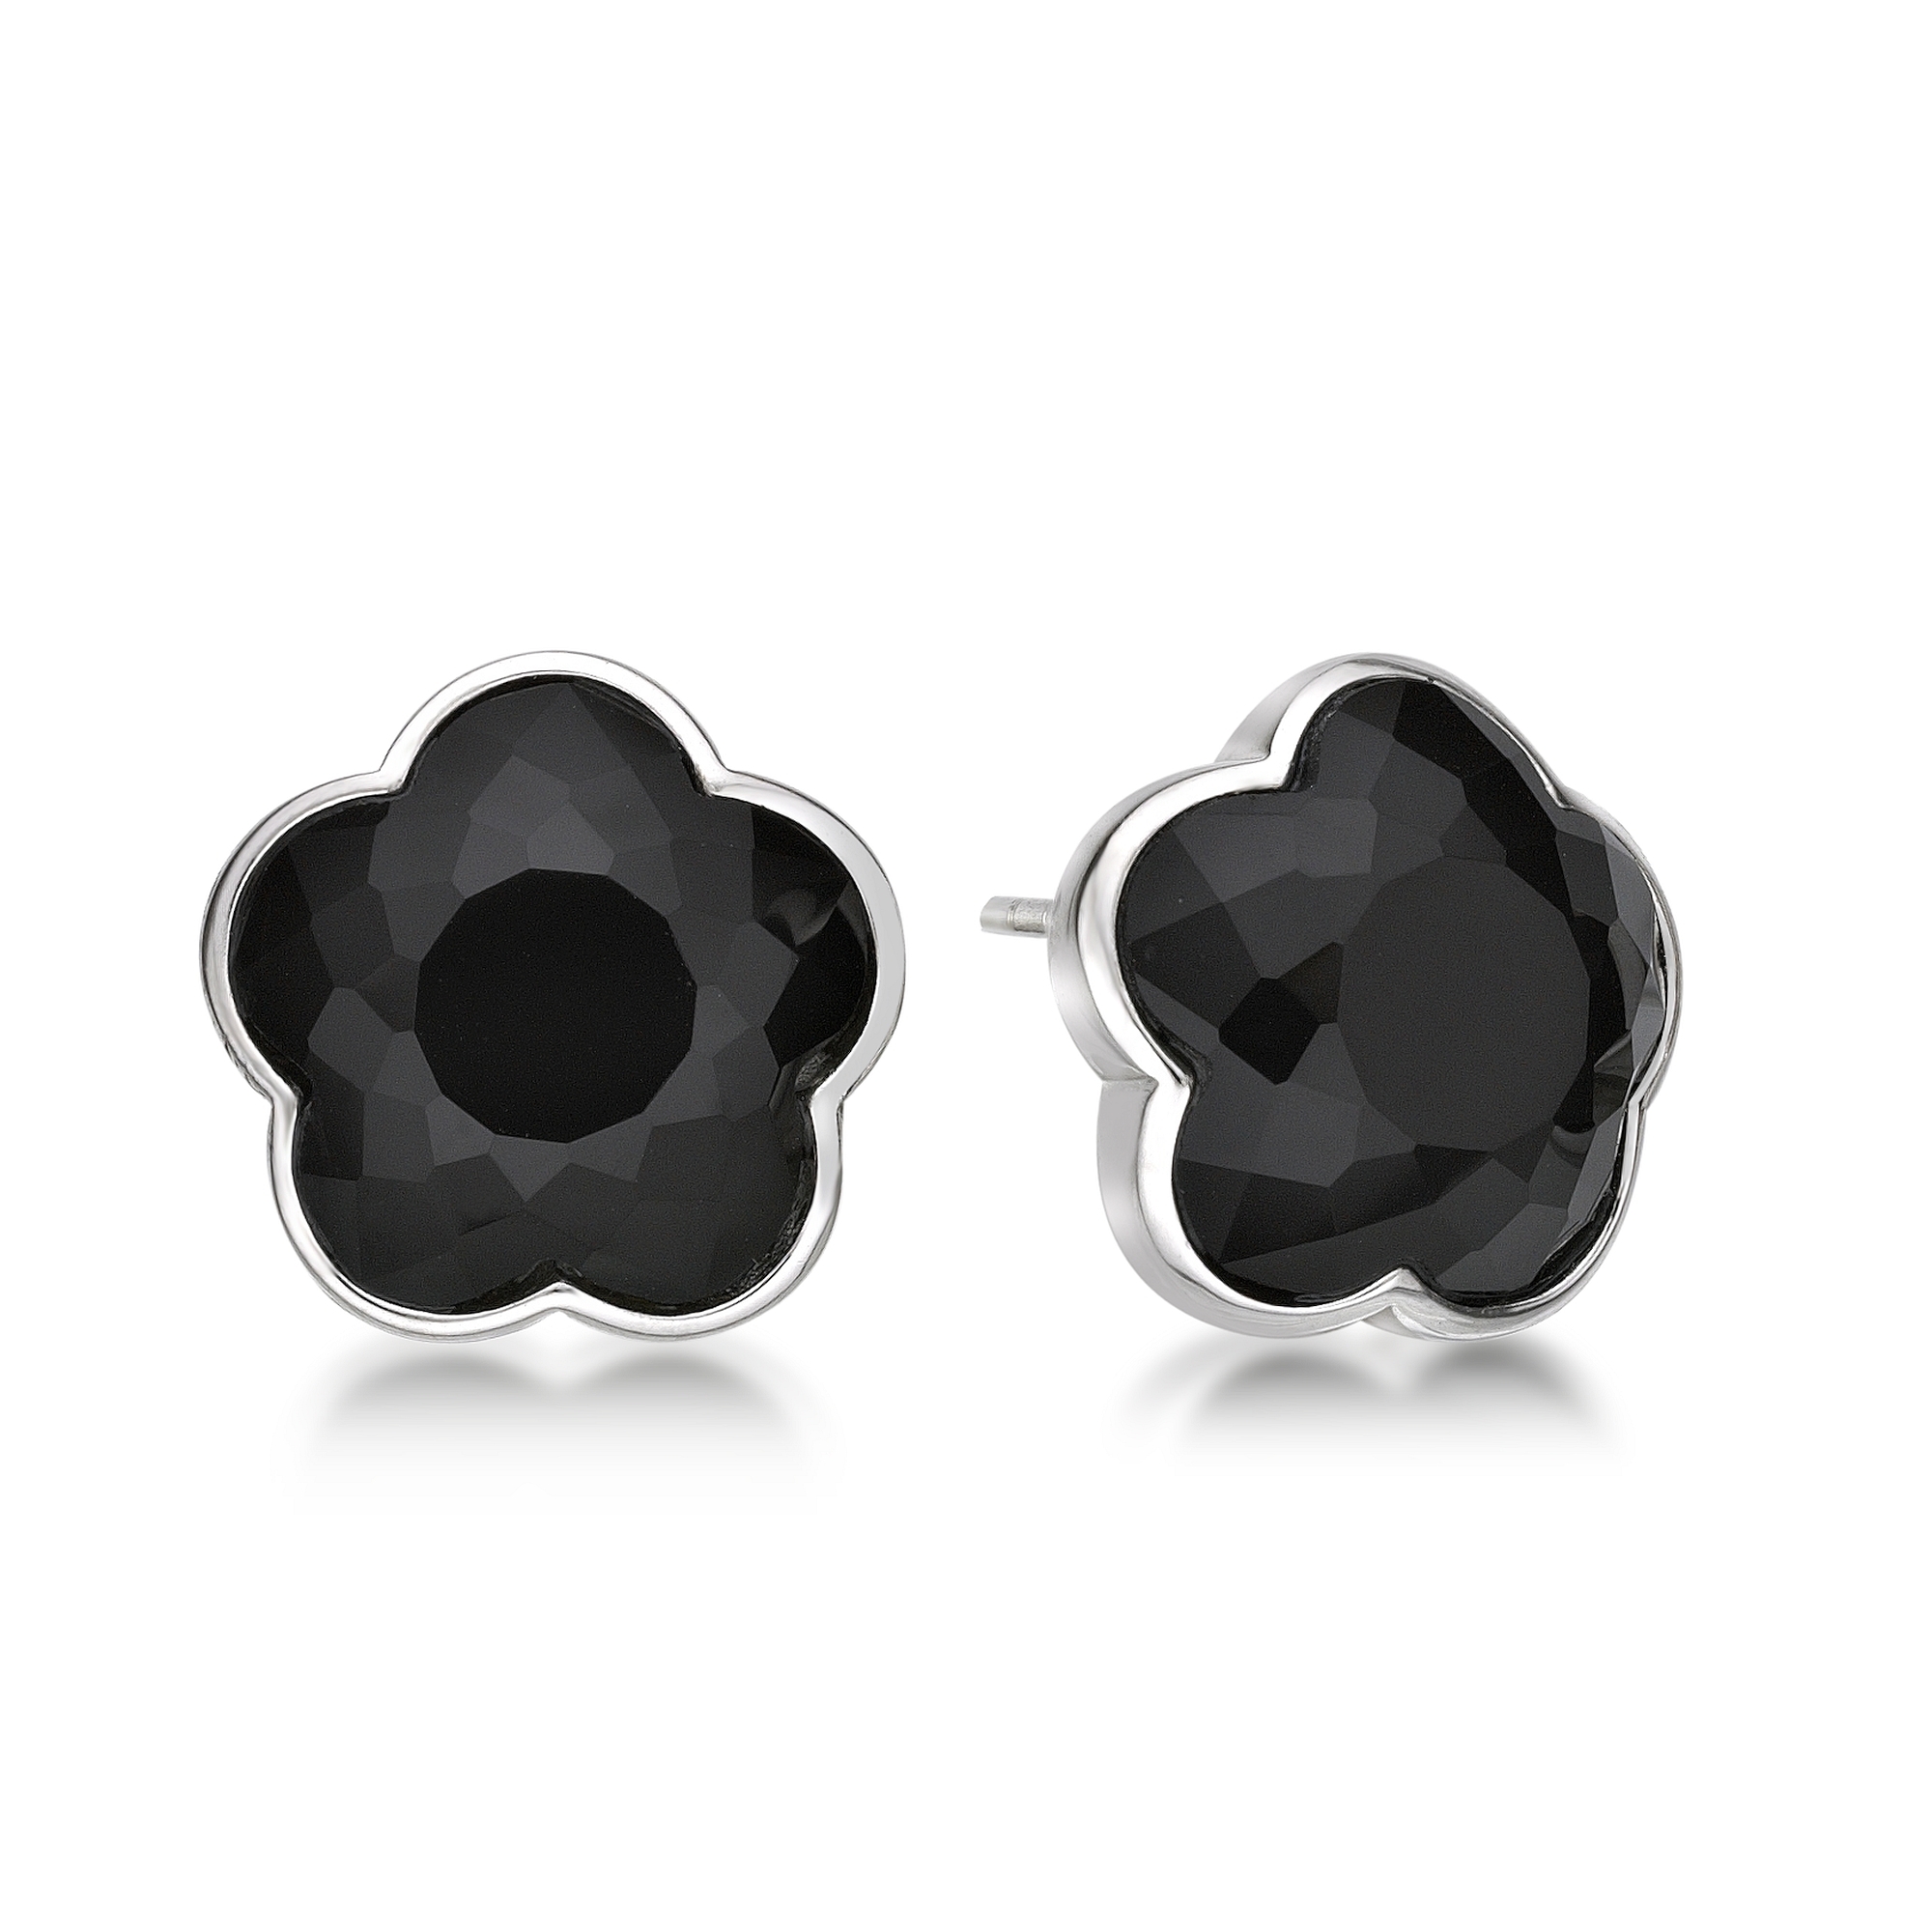 Lavari Jewelers Women's Black Onyx Five Petal Flower Stud Earring with Friction Back, 925 Sterling Silver